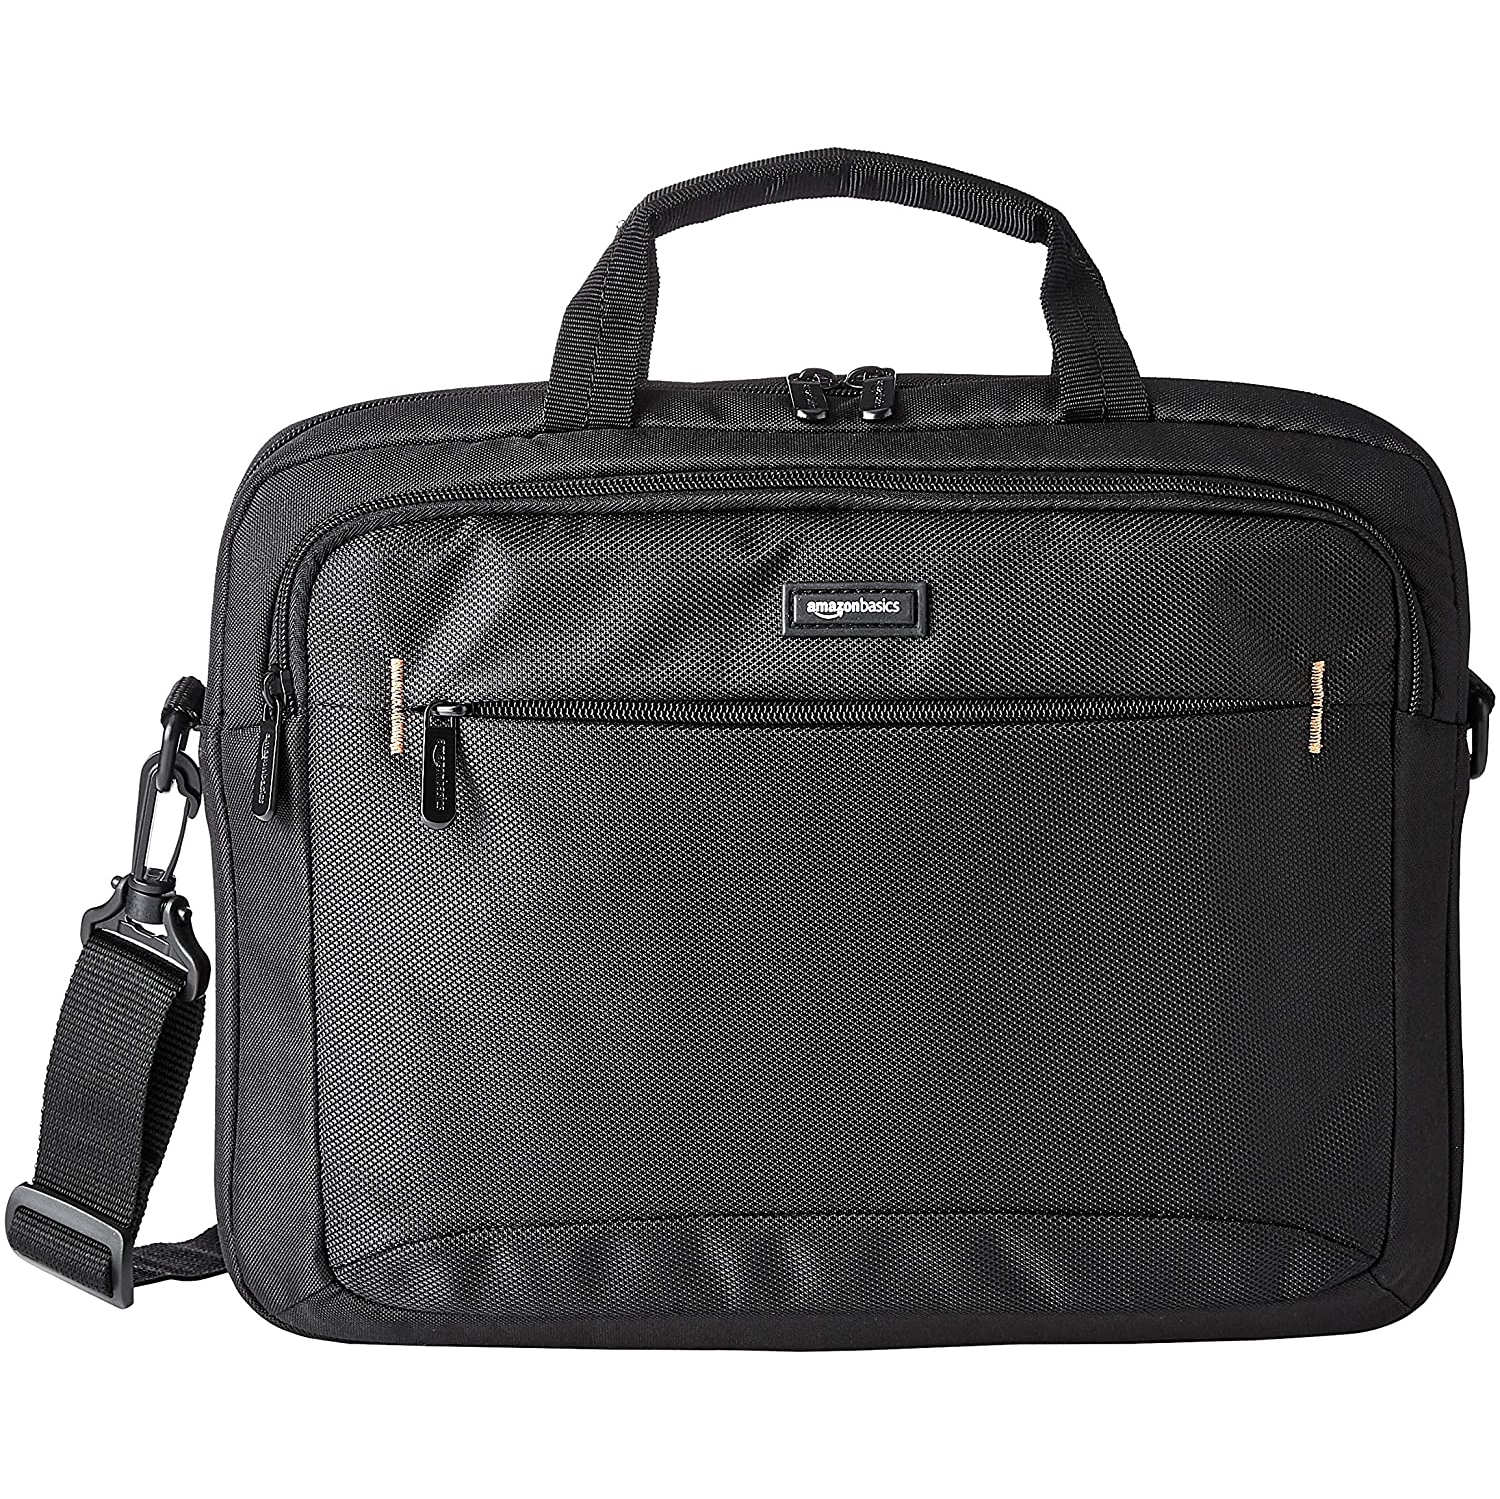 14-Inch Laptop Macbook and Tablet Shoulder Bag Carrying Case